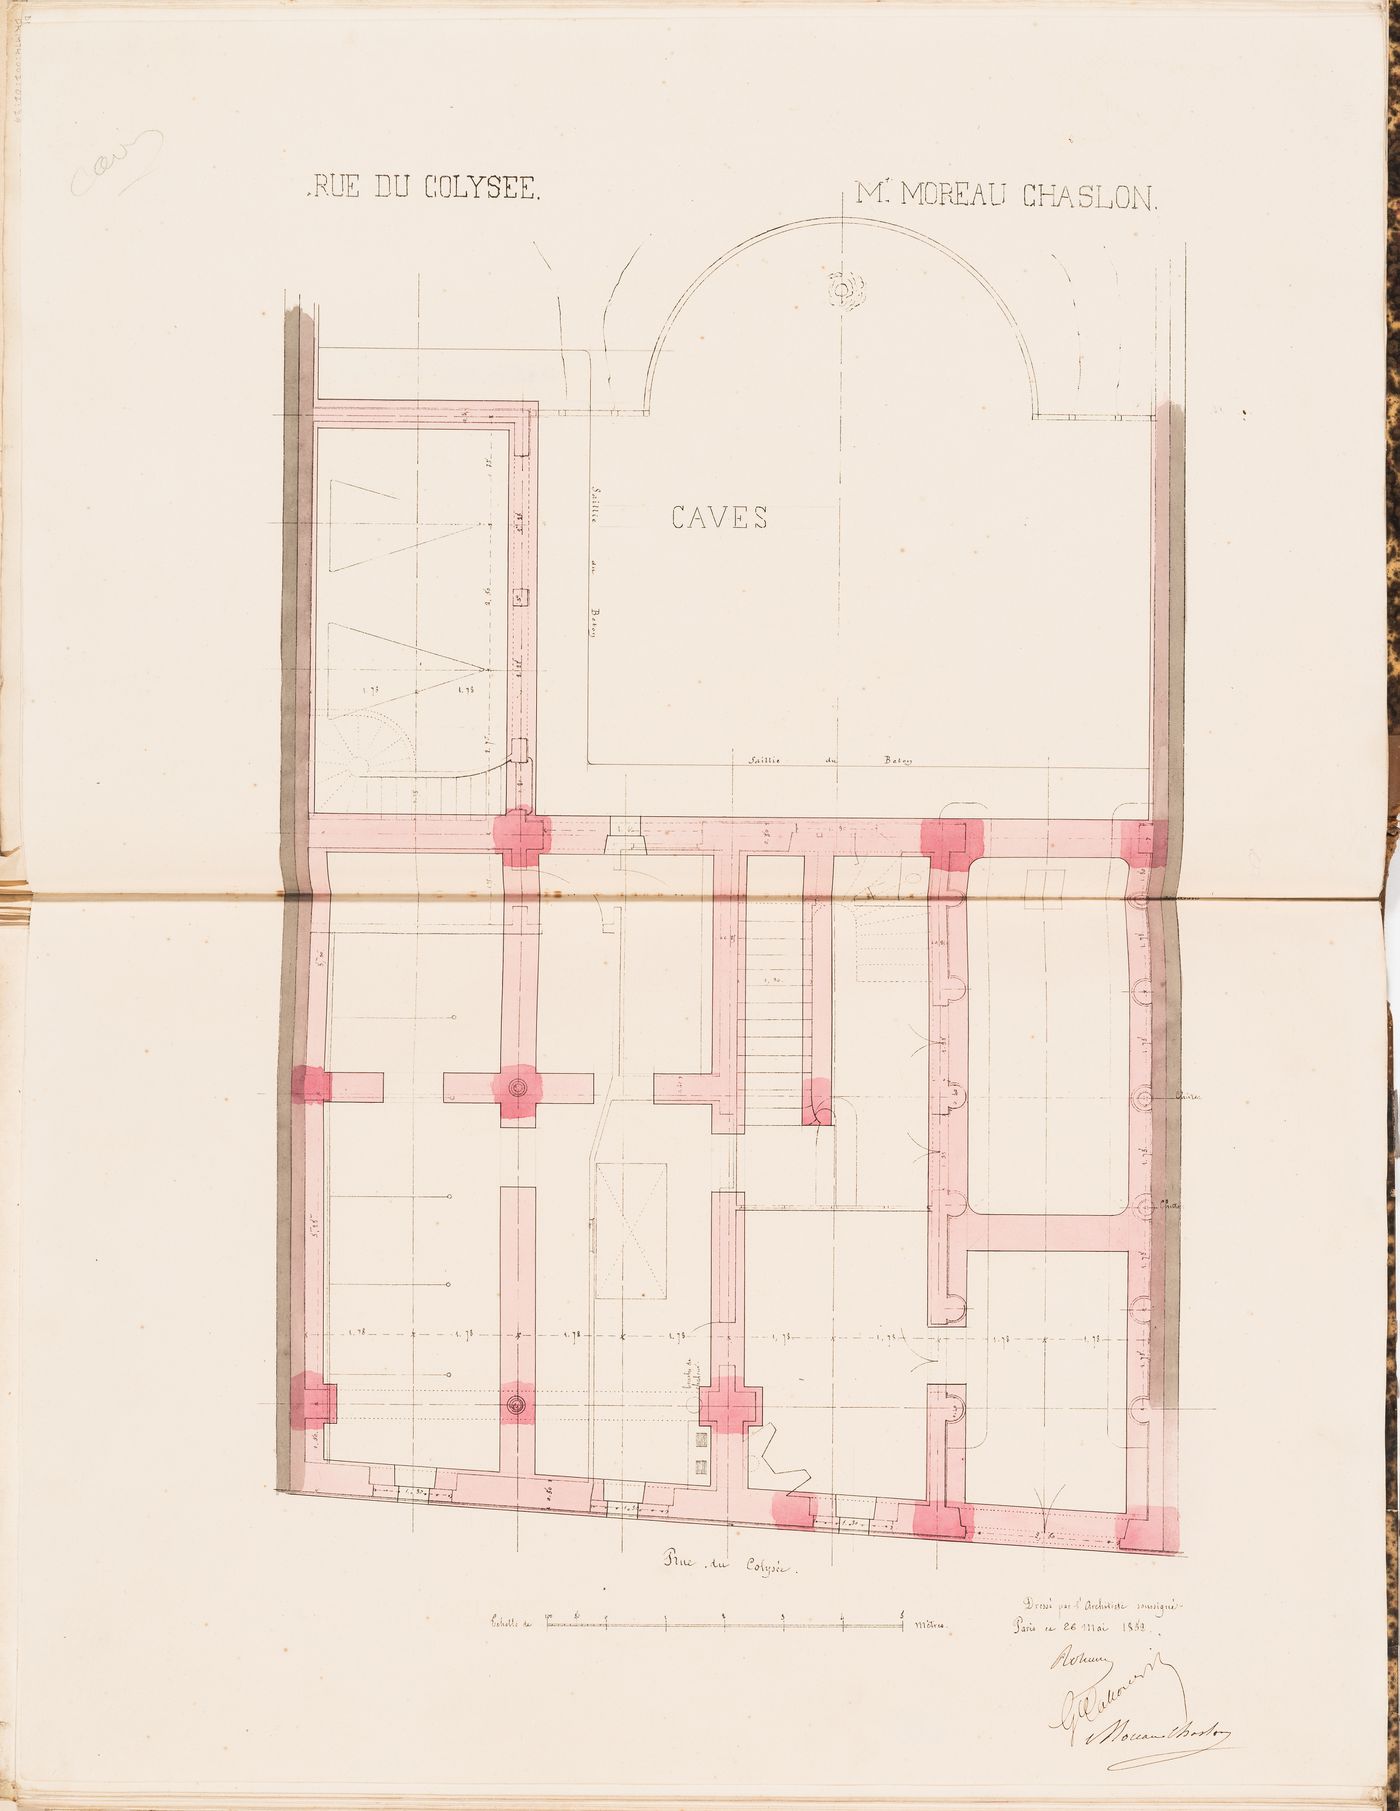 Contract drawing for a house for Monsieur Moreau Chaslon, rue du Colysée, Paris: Plan for the "caves"